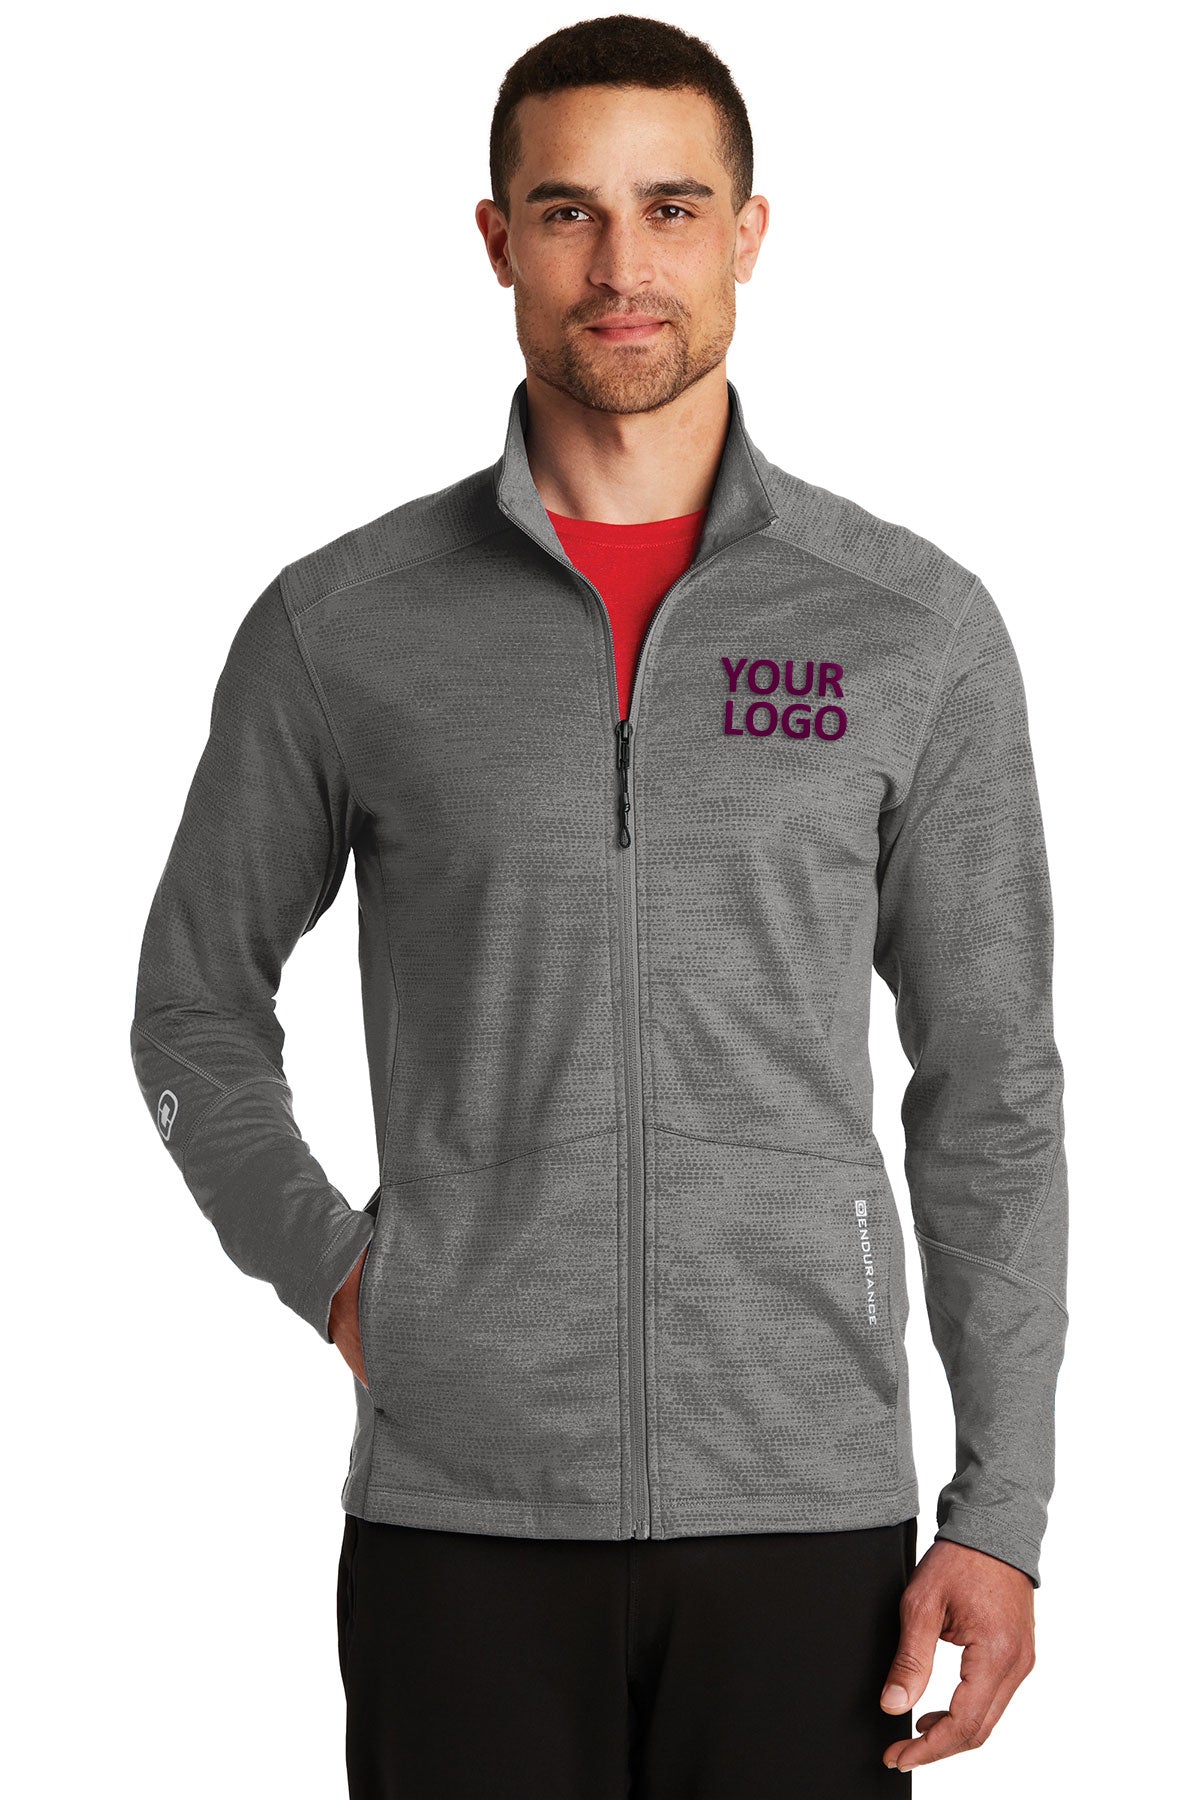 OGIO Endurance Track Grey Heather OE702 company embroidered jackets